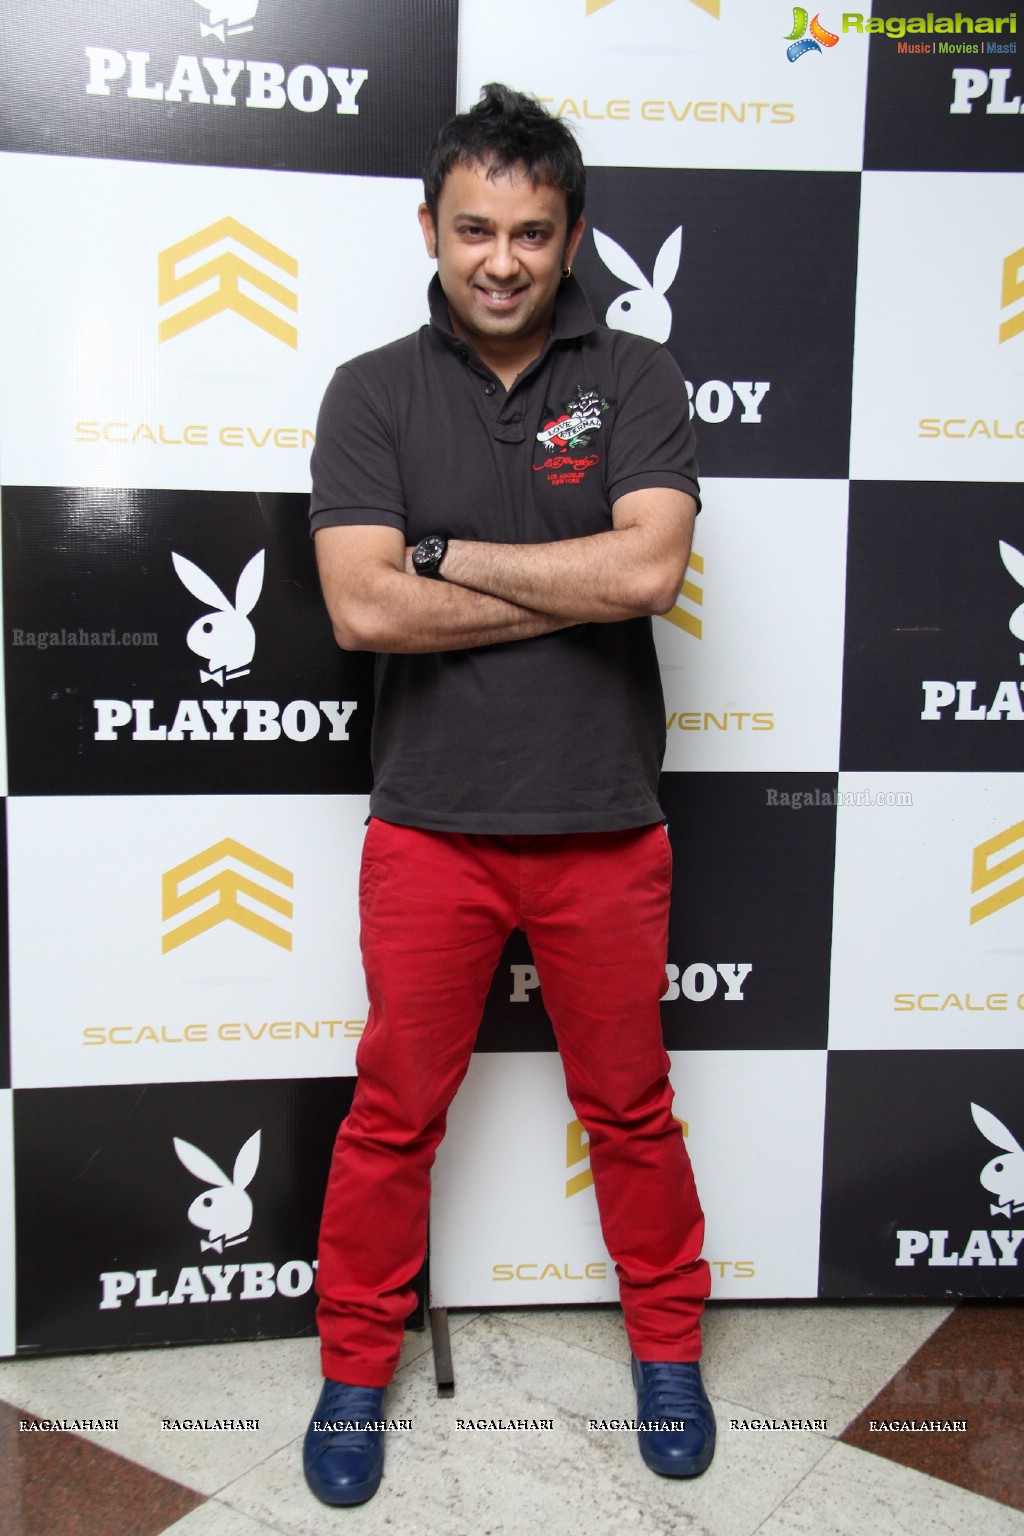 Bollywood Thursday with DJ Piyush Bajaj at Playboy Club - May 12, 2016